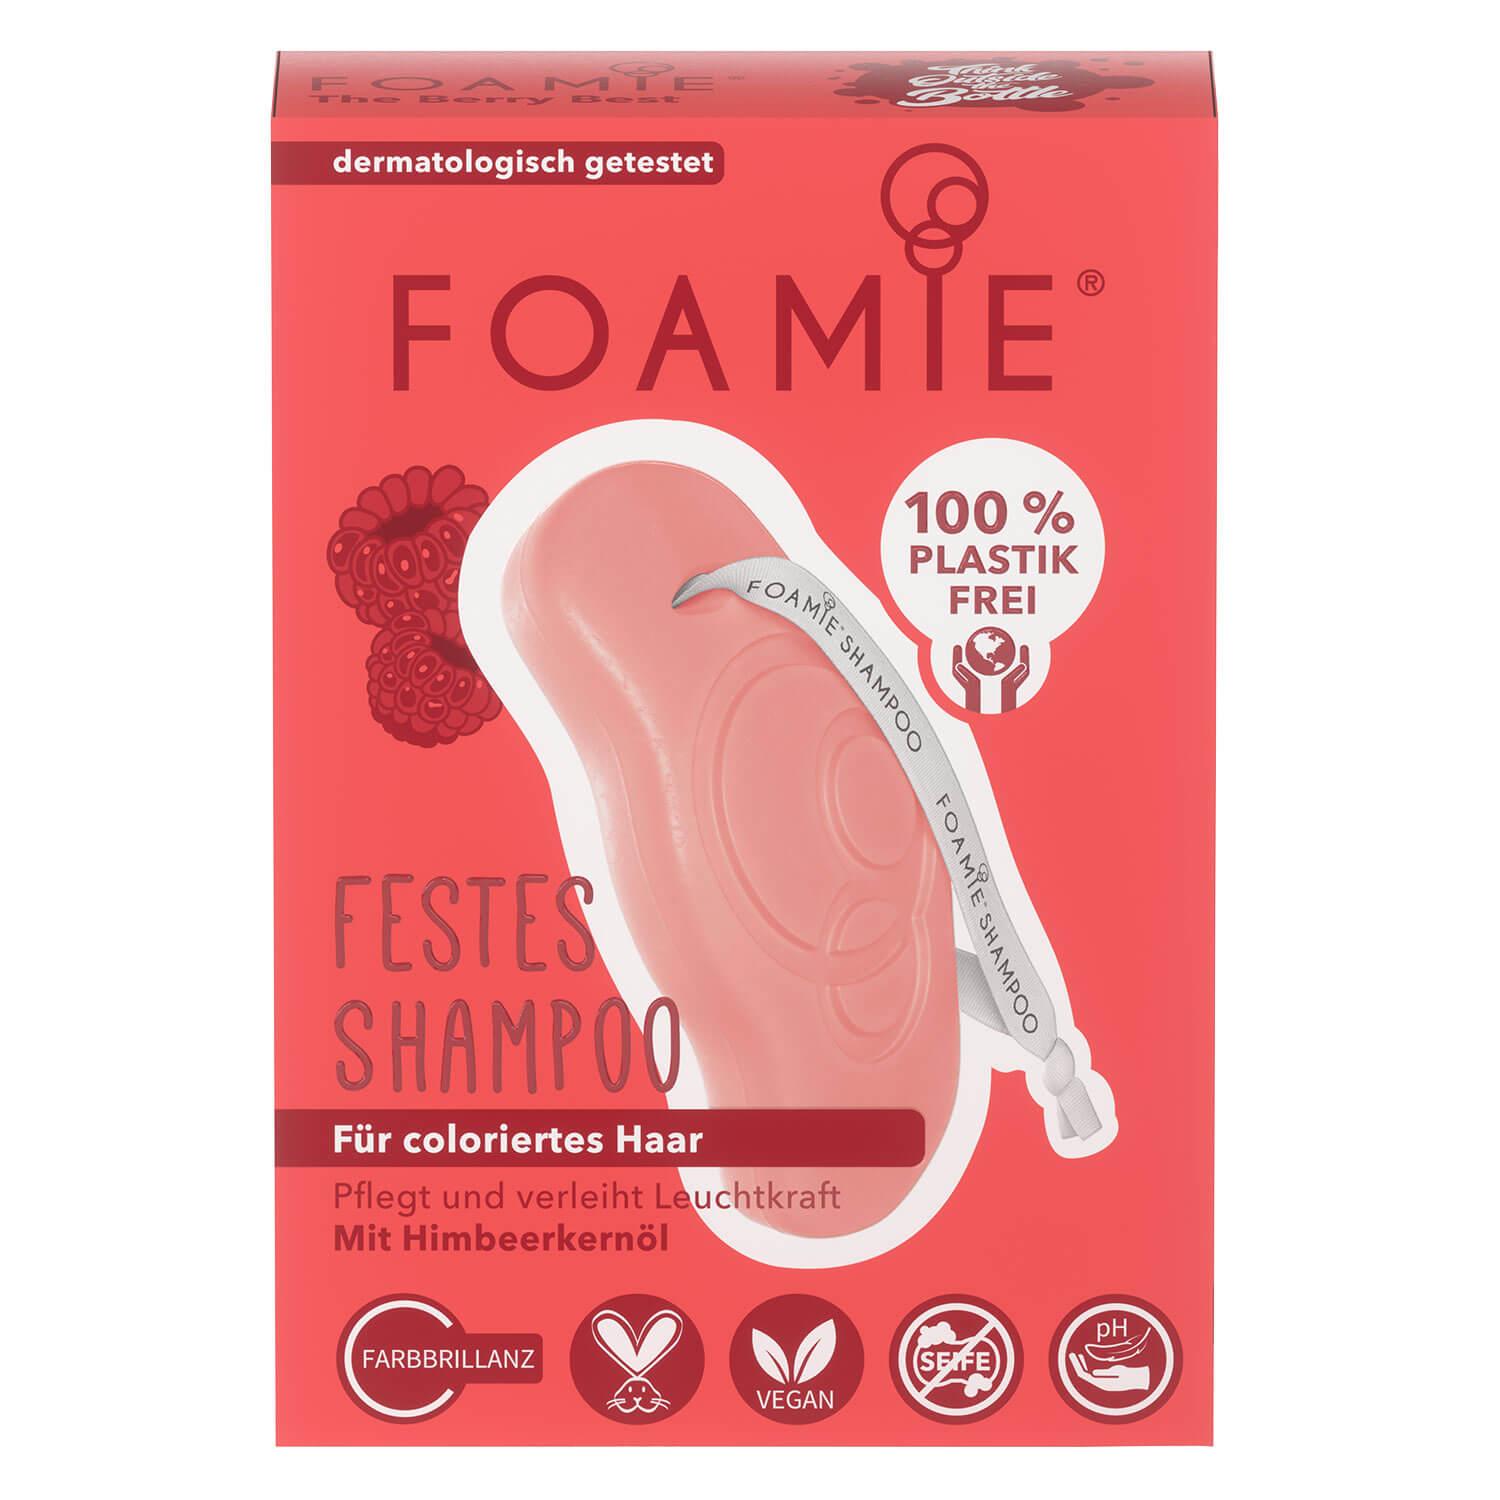 Foamie - Festes Shampoo The Berry Best